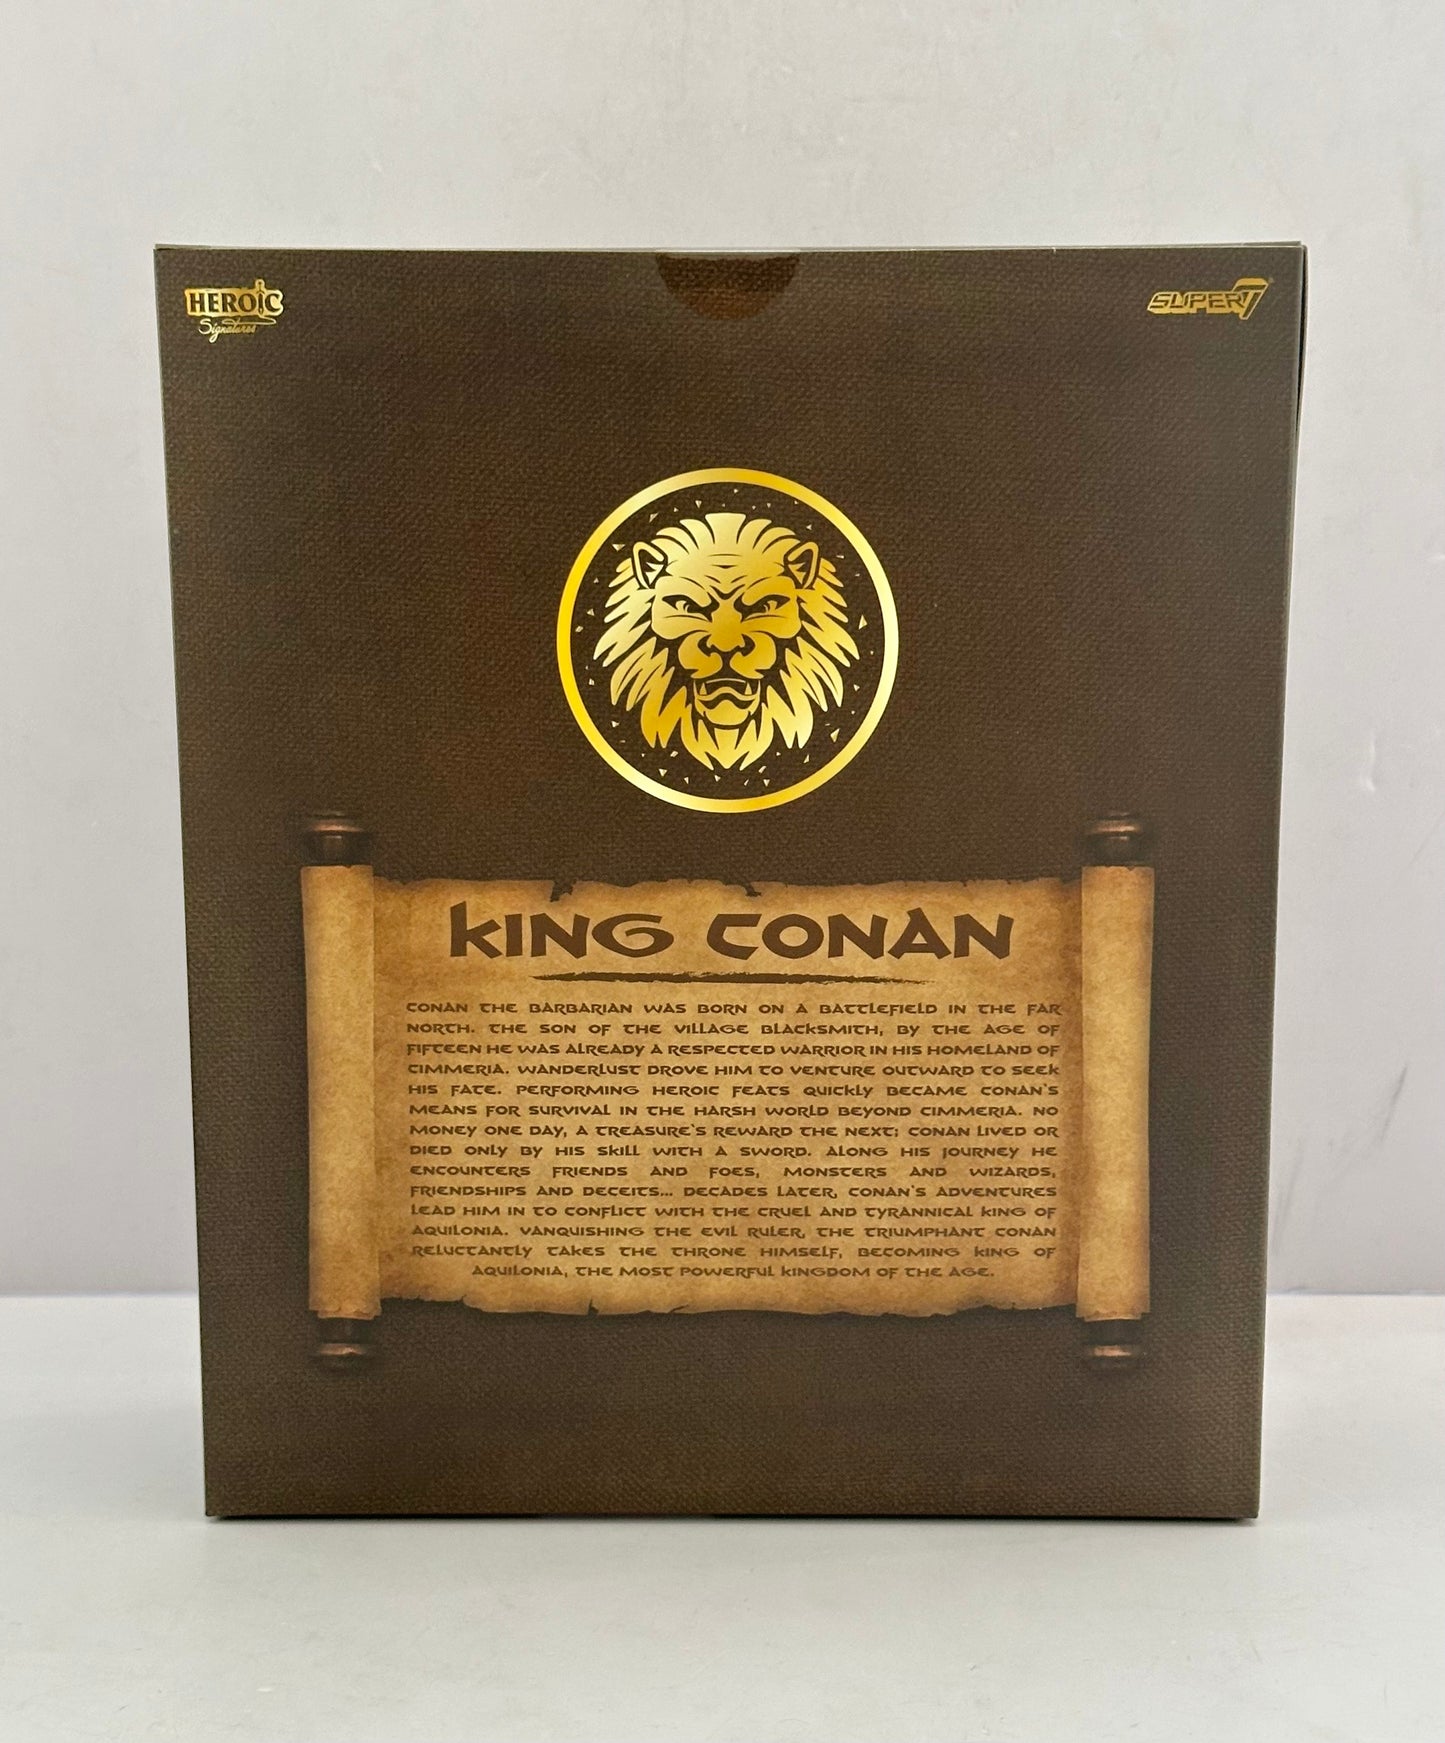 Super 7 King Conan